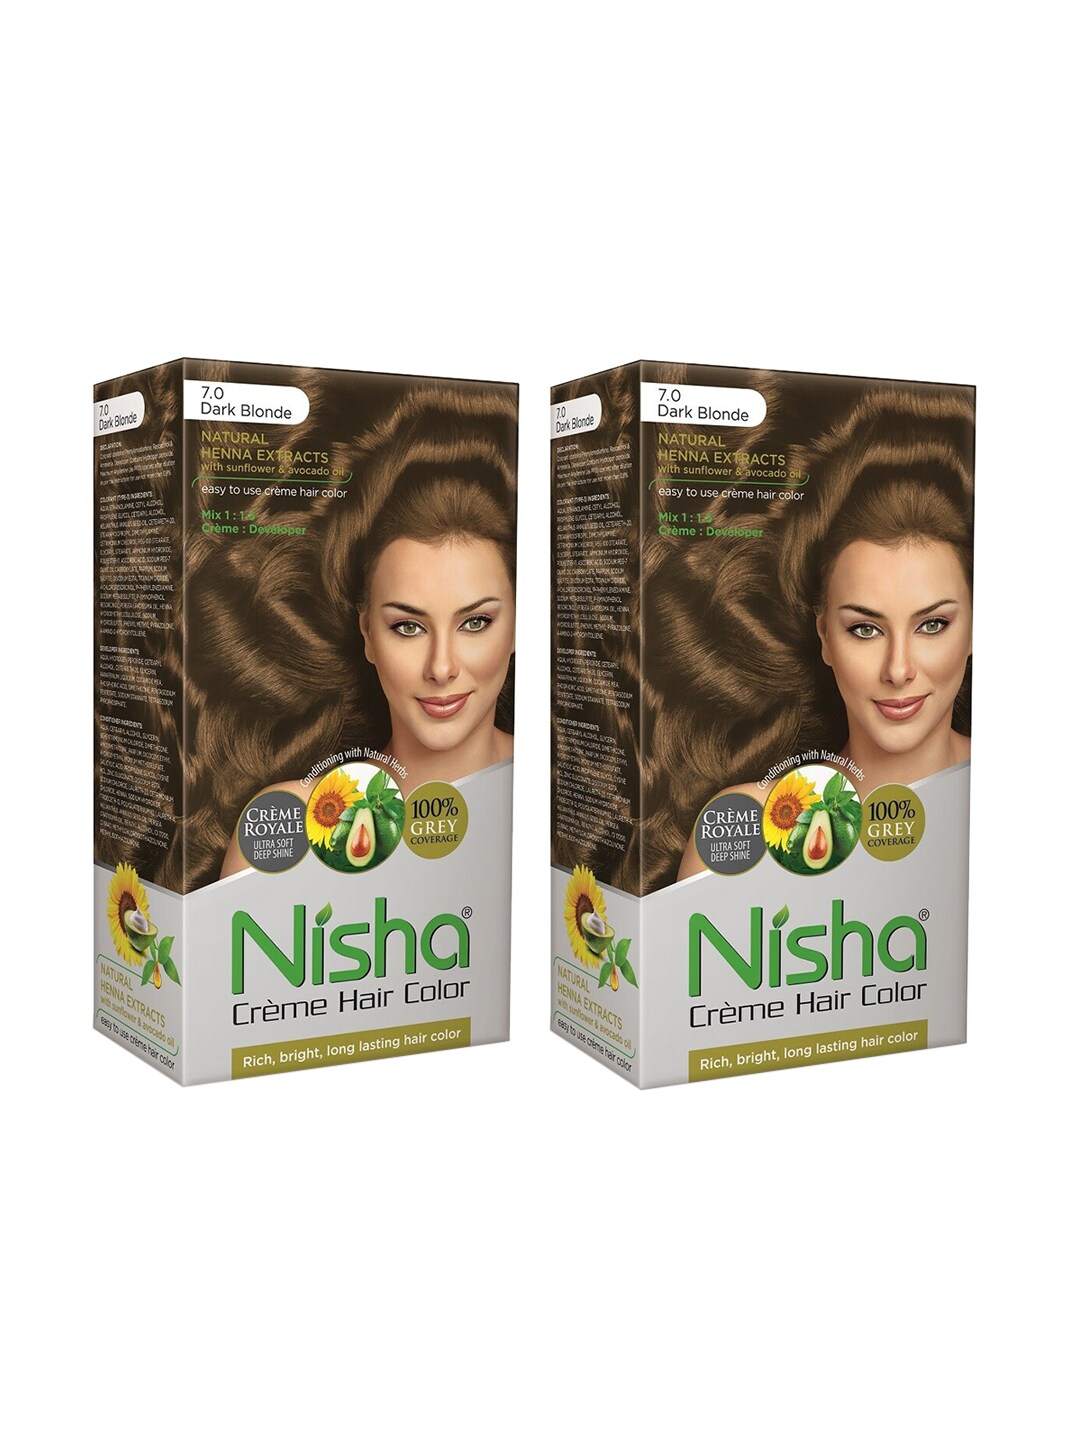 Nisha Unisex Pack of 2 Creme Hair Color 150gm each- Dark Blonde Price in India